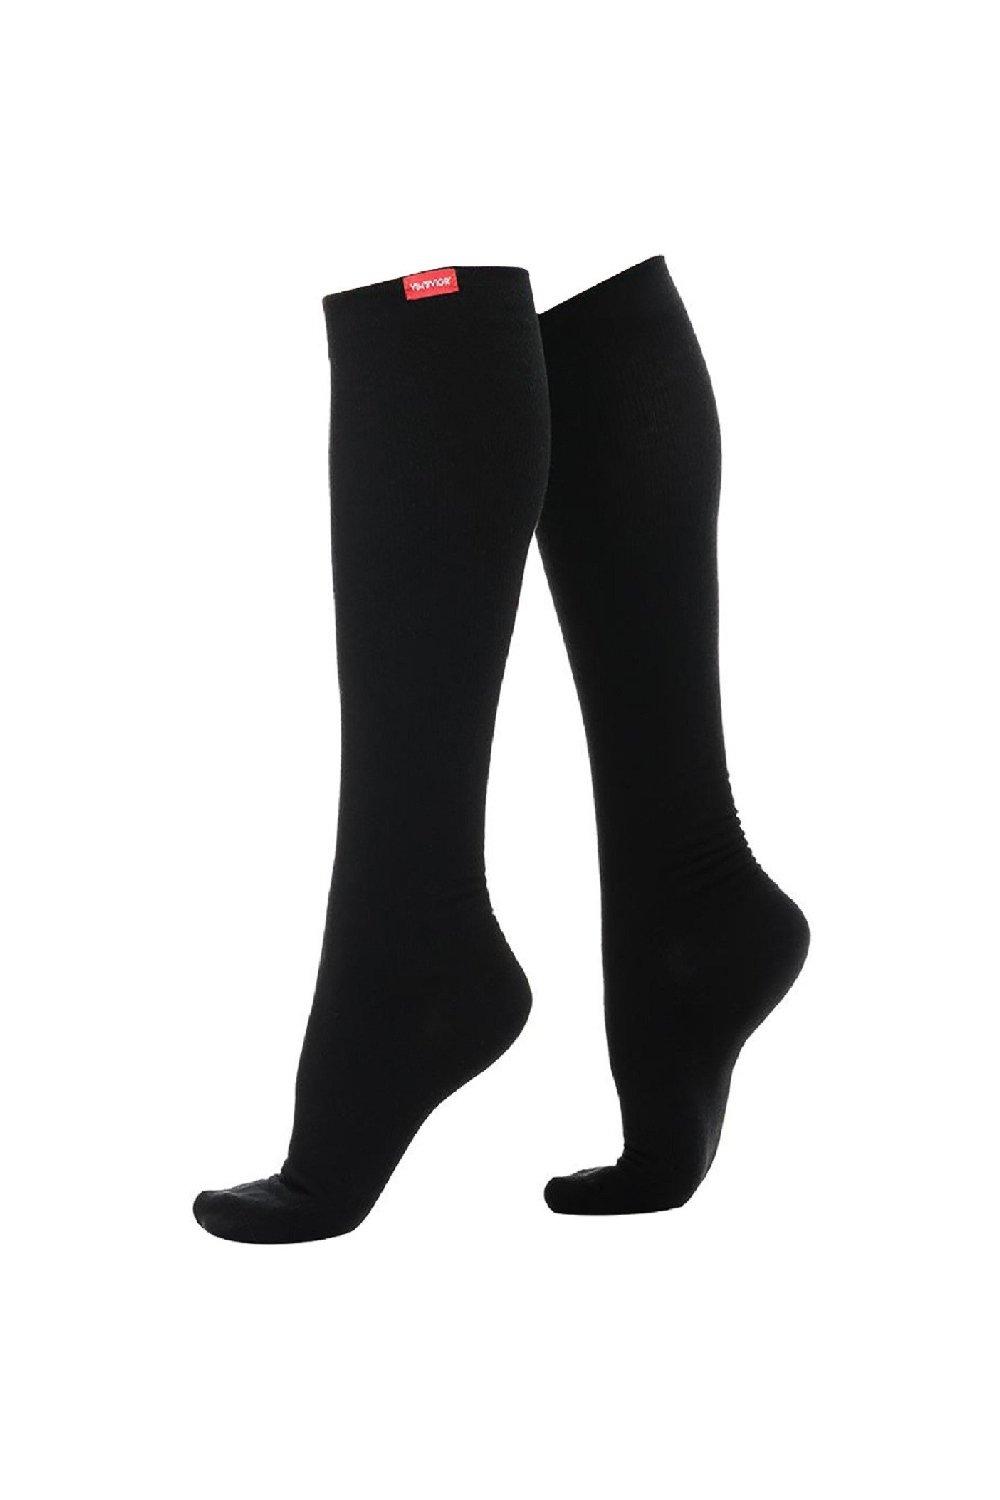 Graduated Compression 15-20 mmhg Cotton Socks for Swollen Legs & DVT